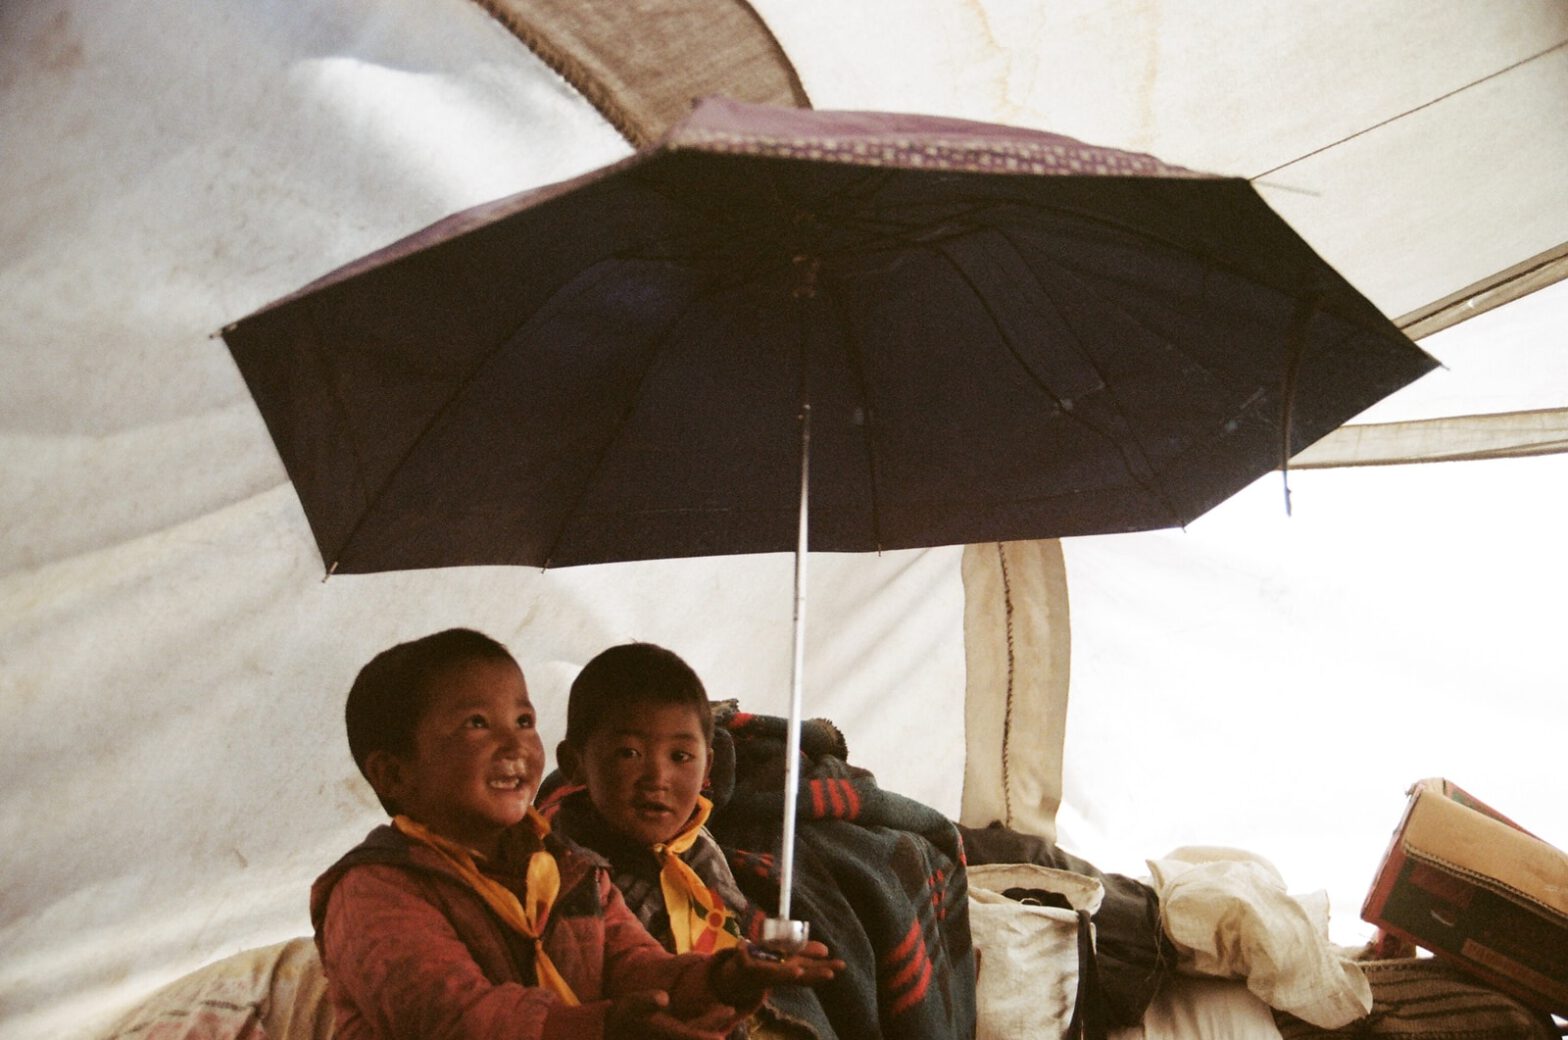 boy holding umbrella in tent